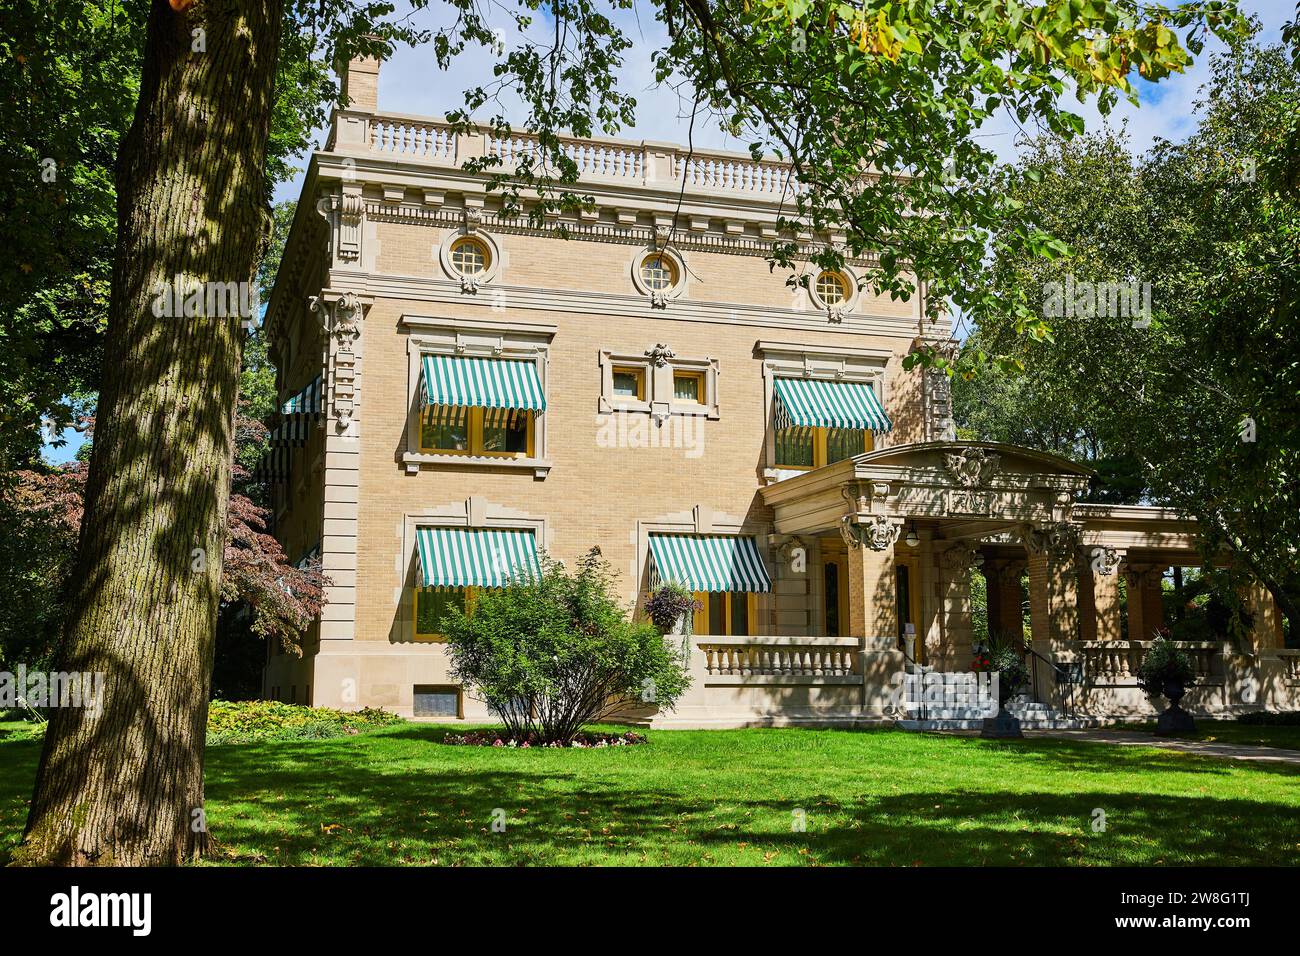 Grand Historic Mansion in üppigem Grün, Blick auf Augenhöhe Stockfoto